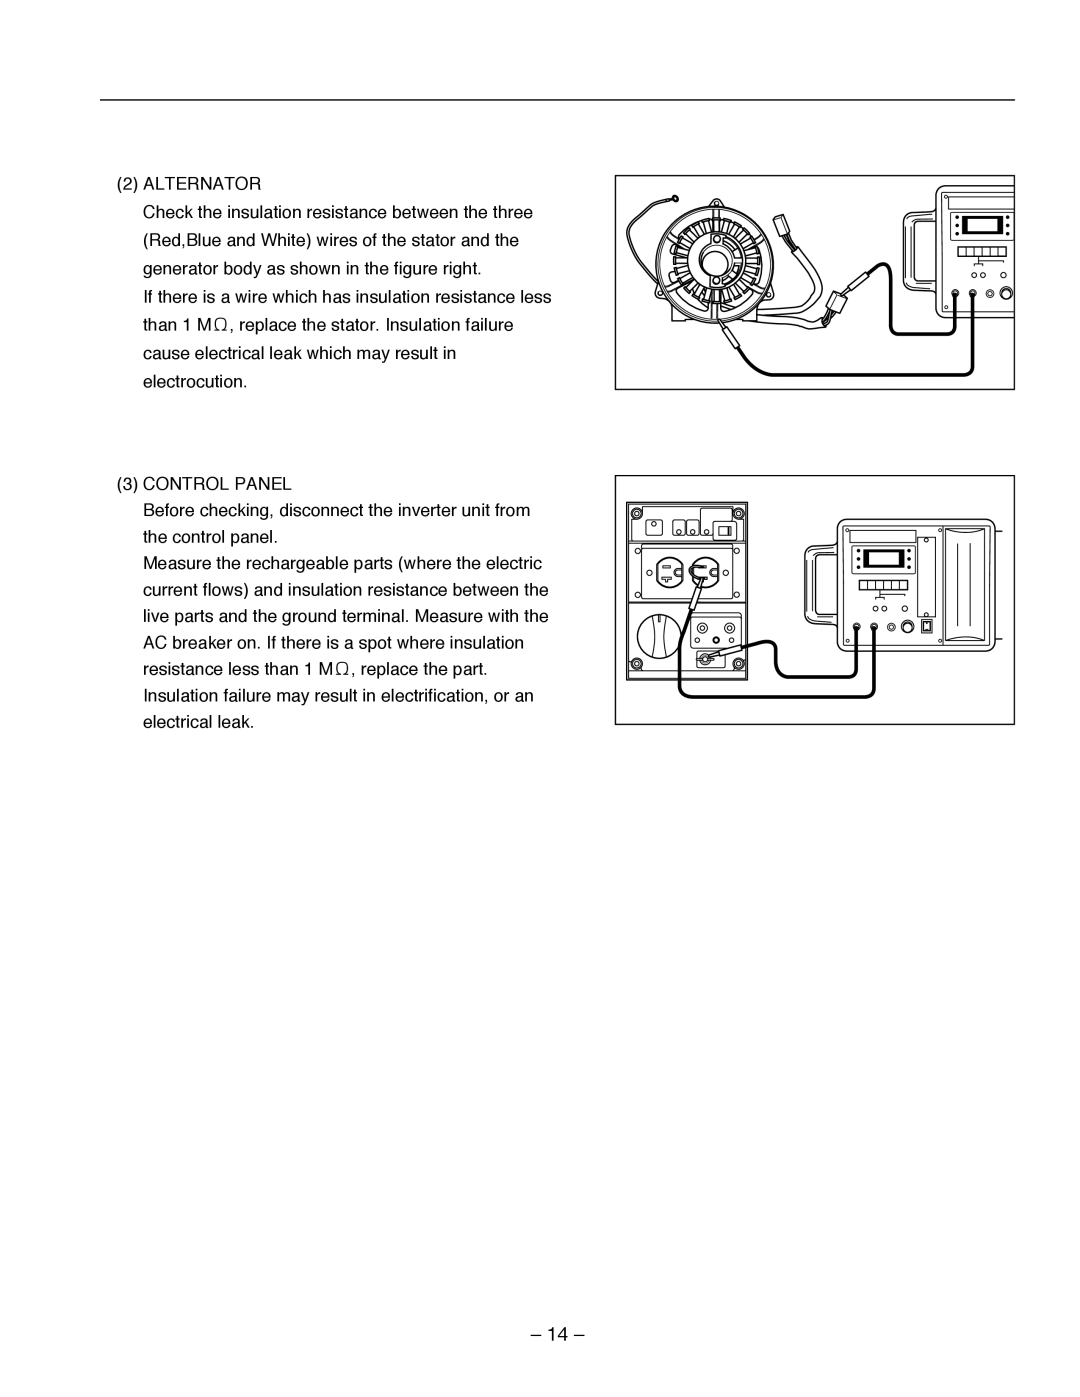 Subaru Robin Power Products R1700i service manual 